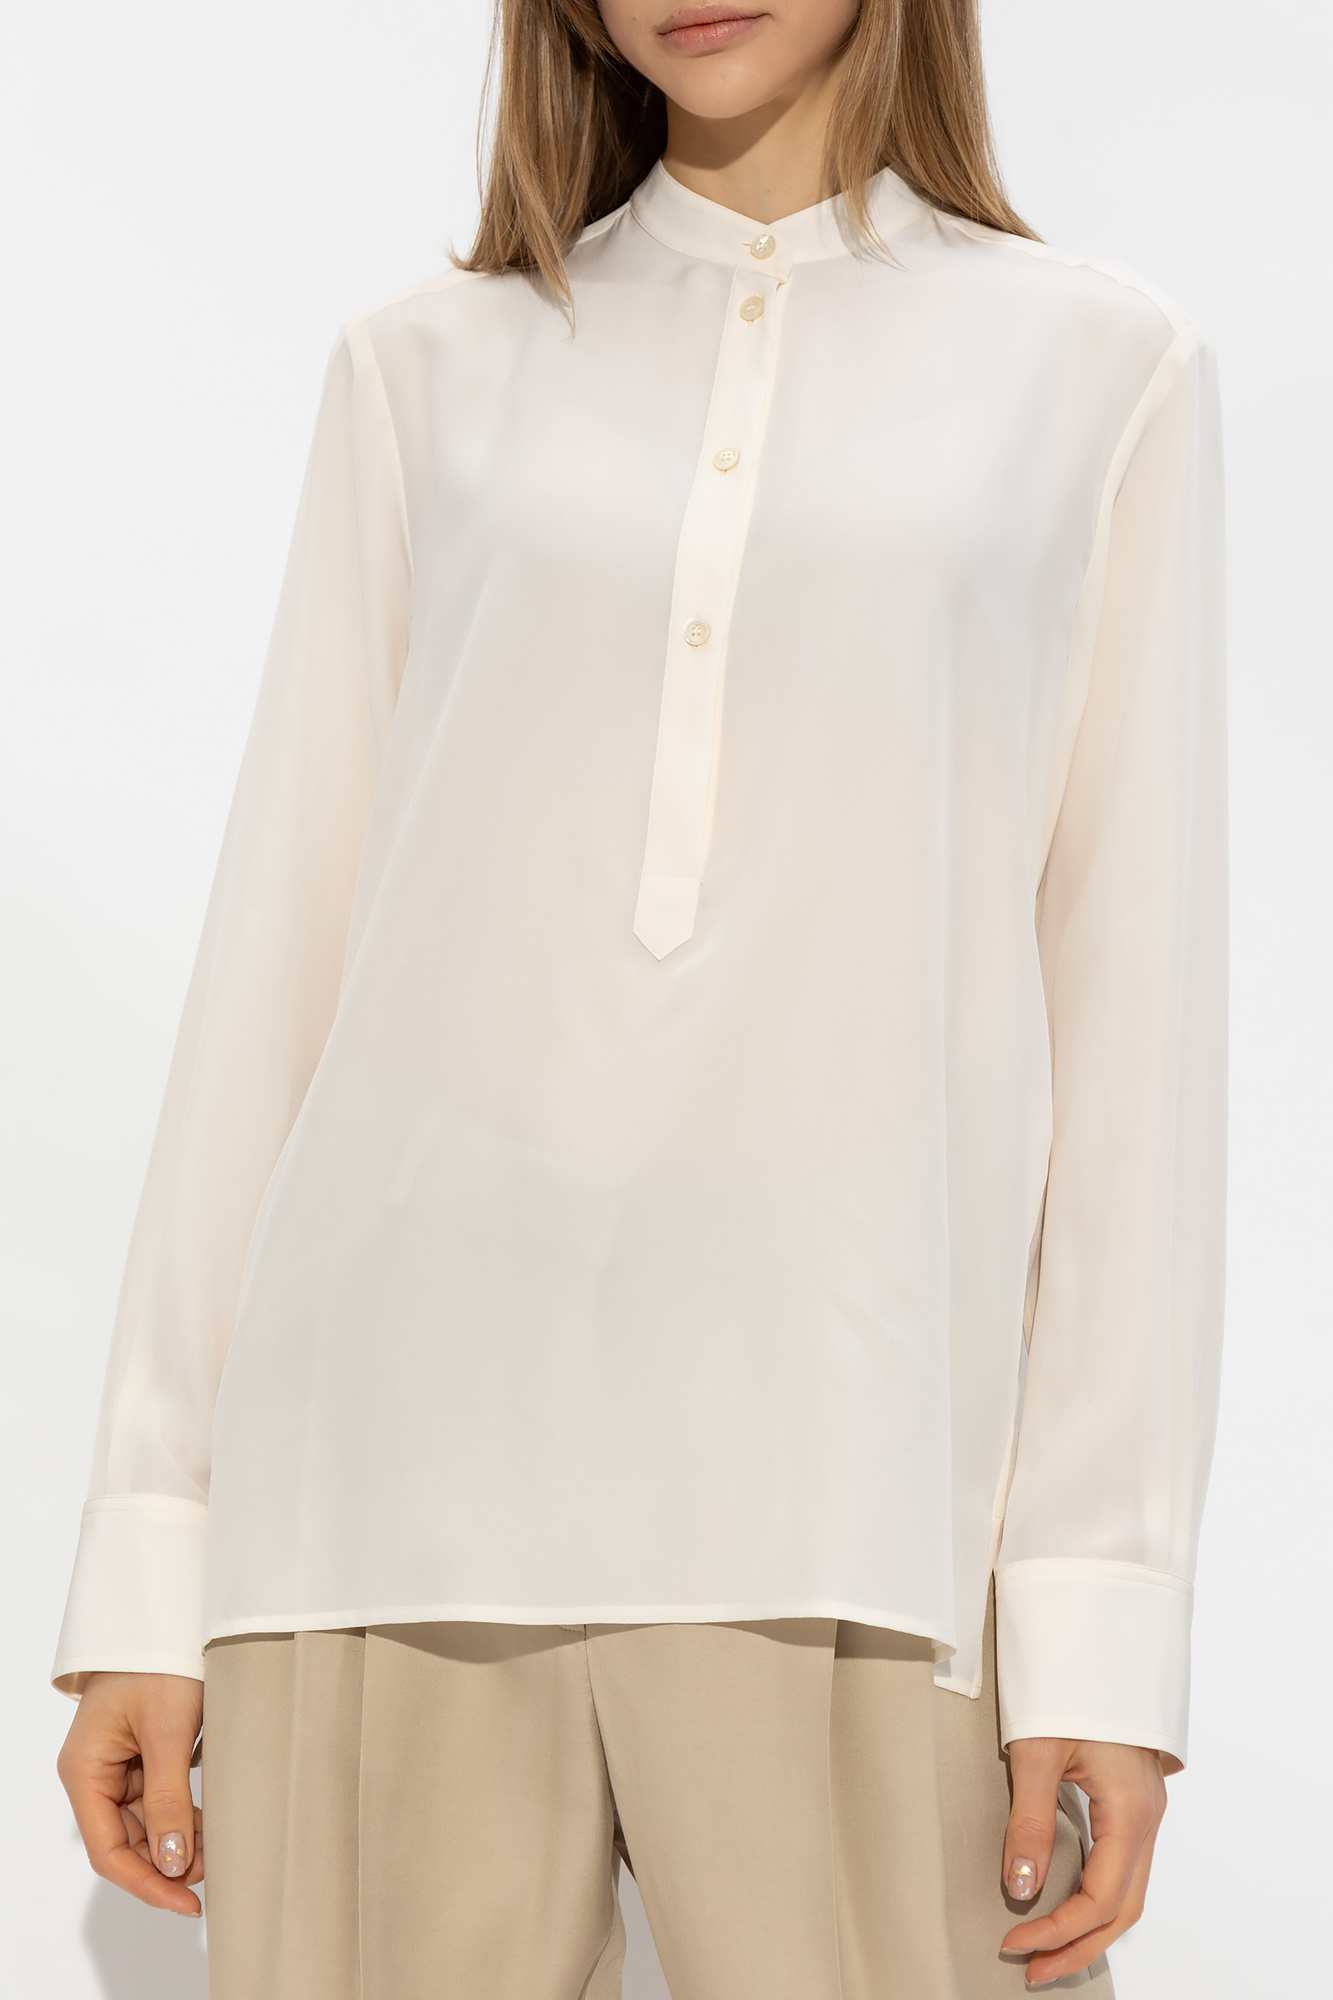 Stella McCartney Silk top, Women's Clothing